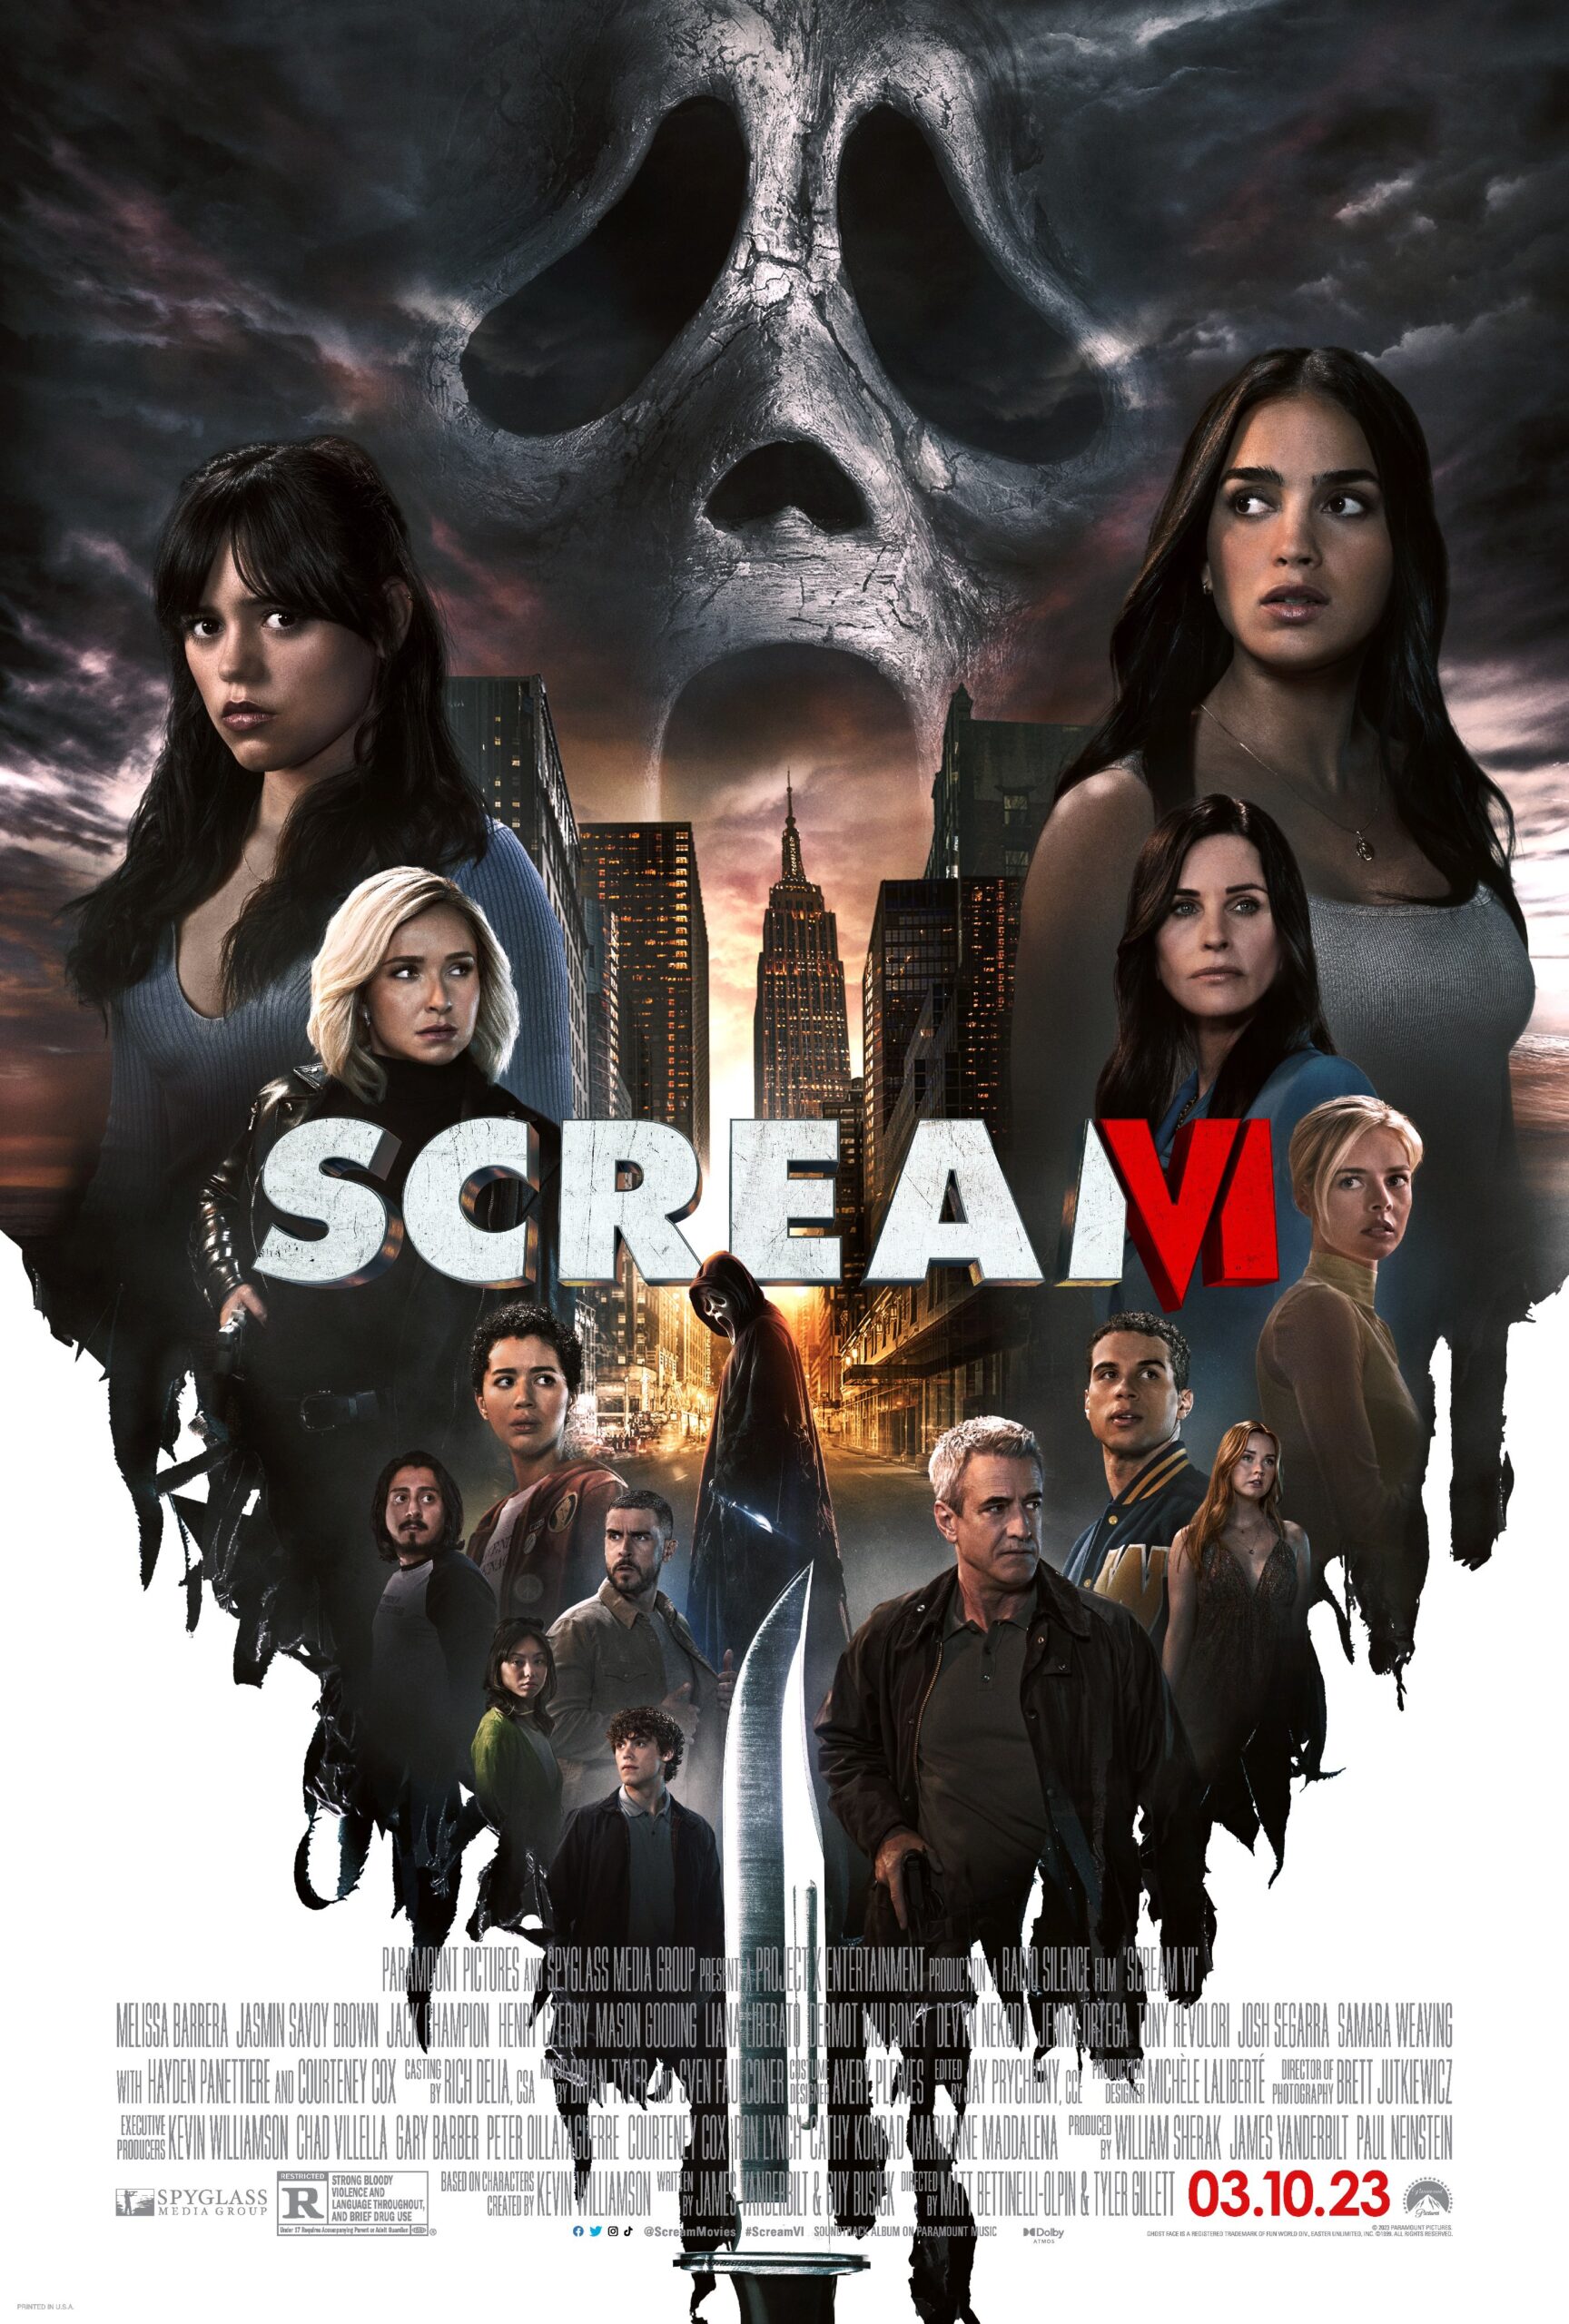 Scream VI Poster - Courtesy of IMDB